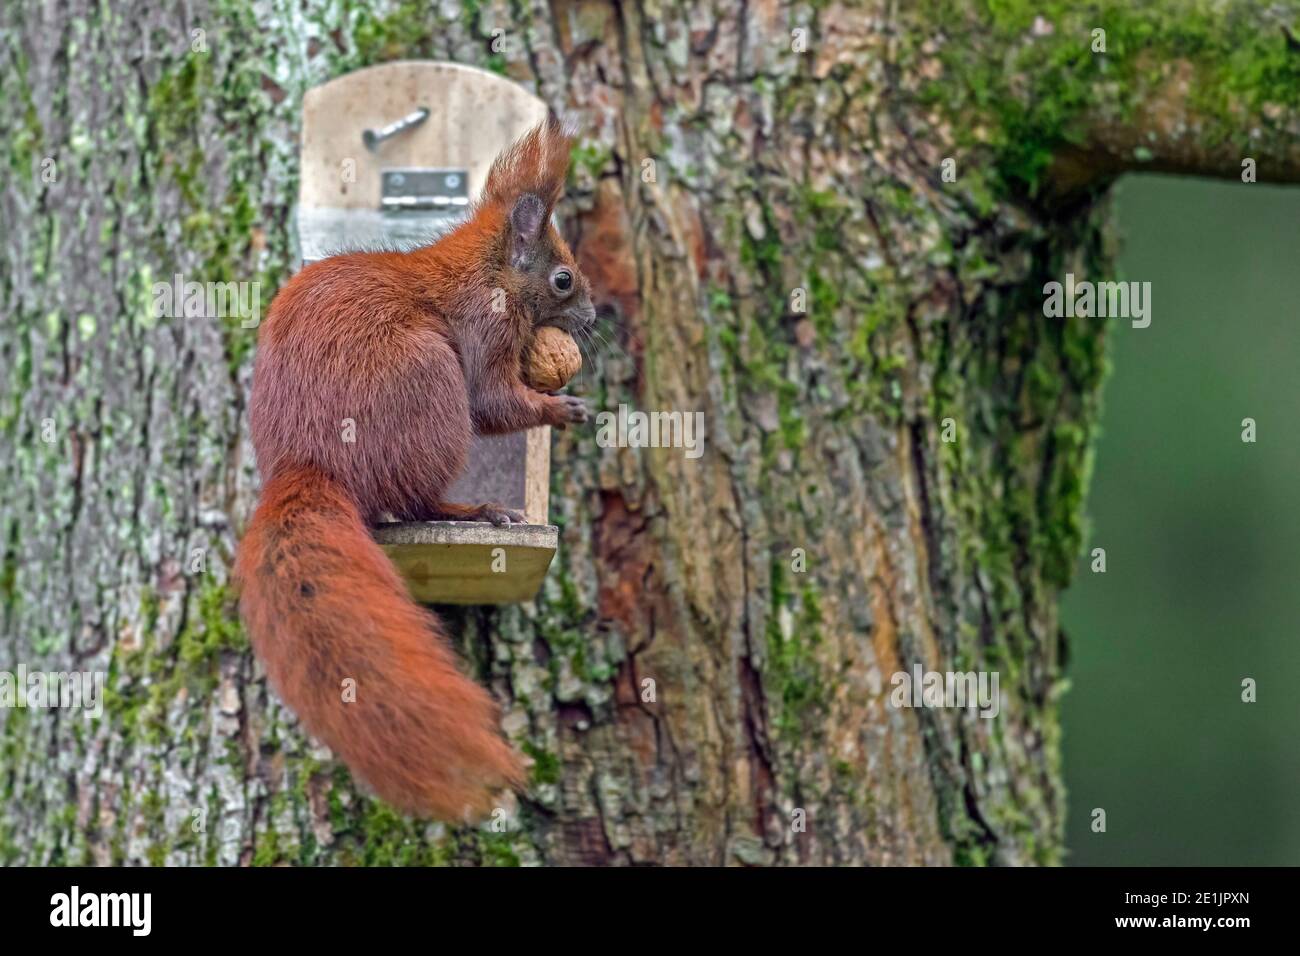 Eurasian red squirrel (Sciurus vulgaris) eating walnut from squirrel feeder in tree in garden in winter Stock Photo